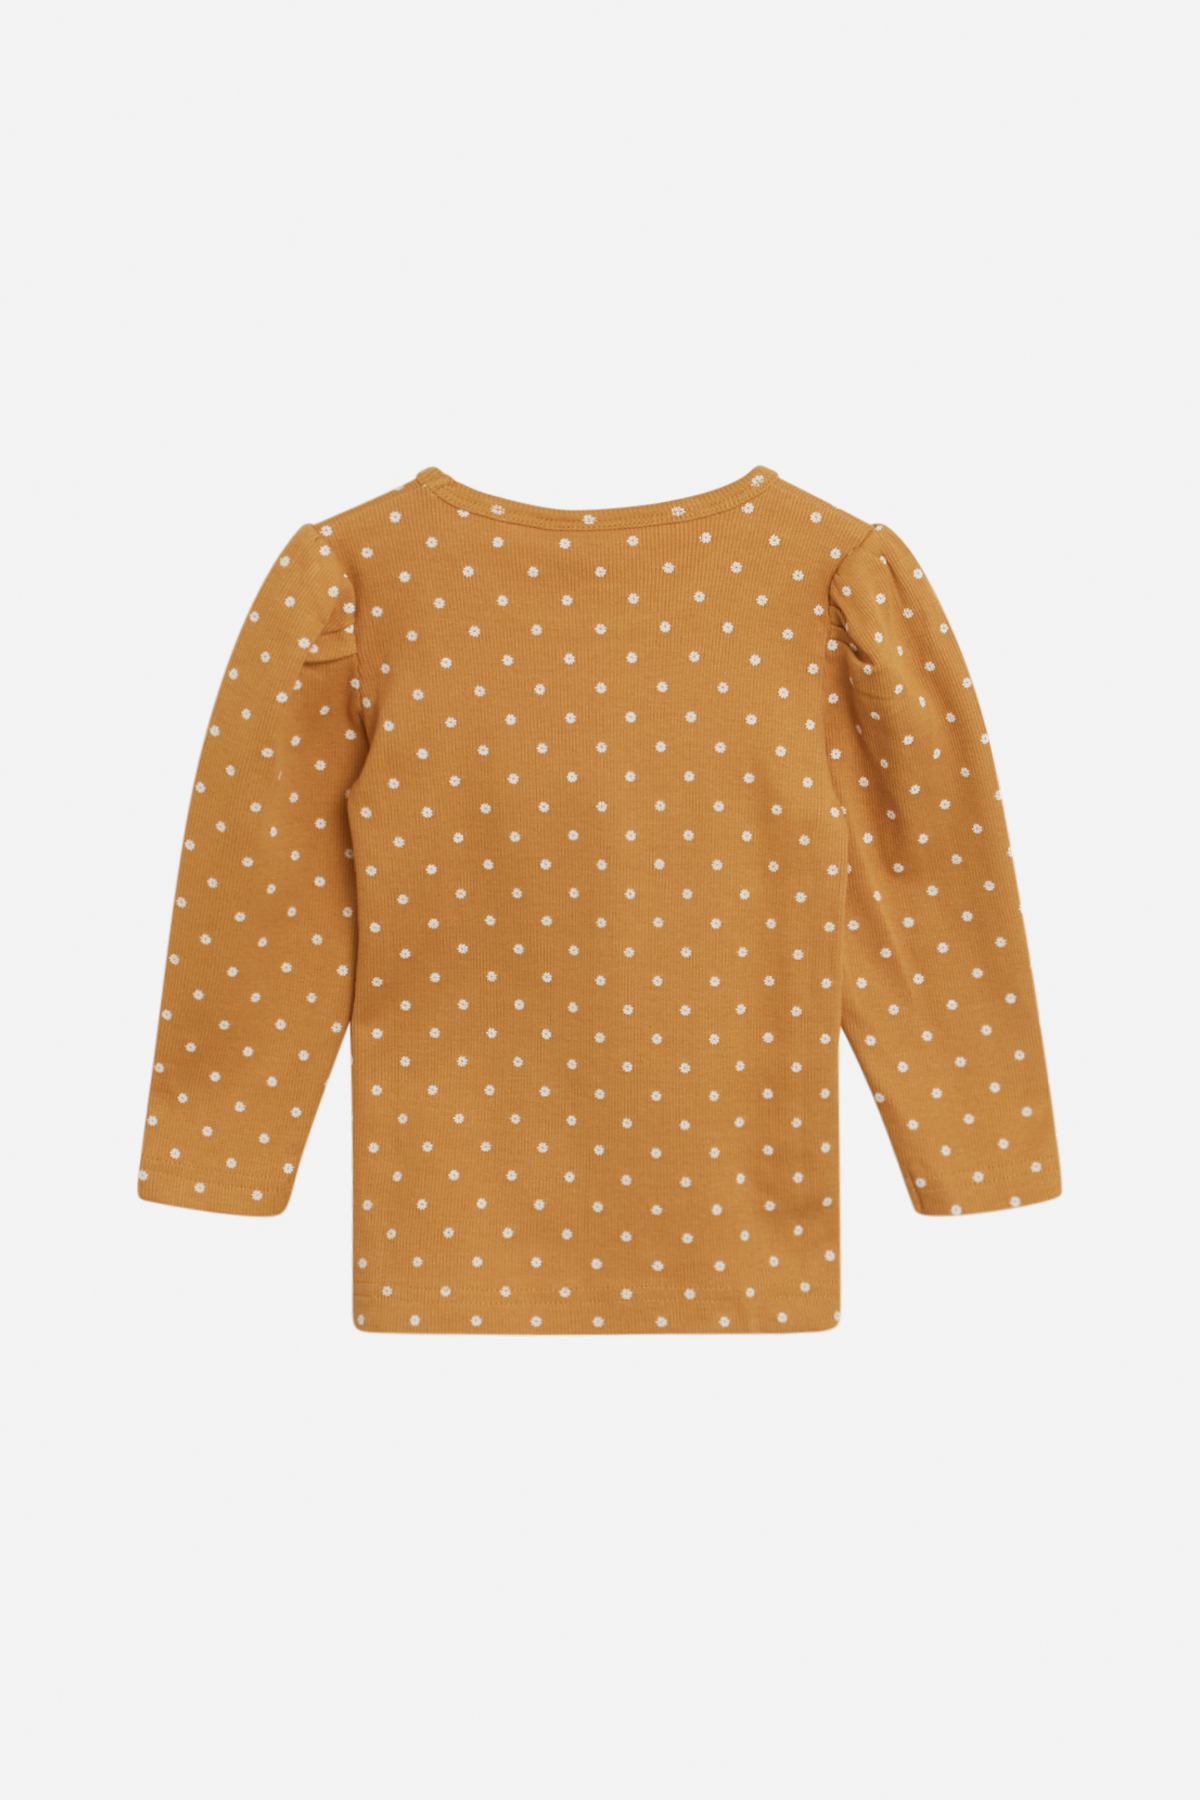  Alieen T-Shirt, Cinnamon, 98 cm